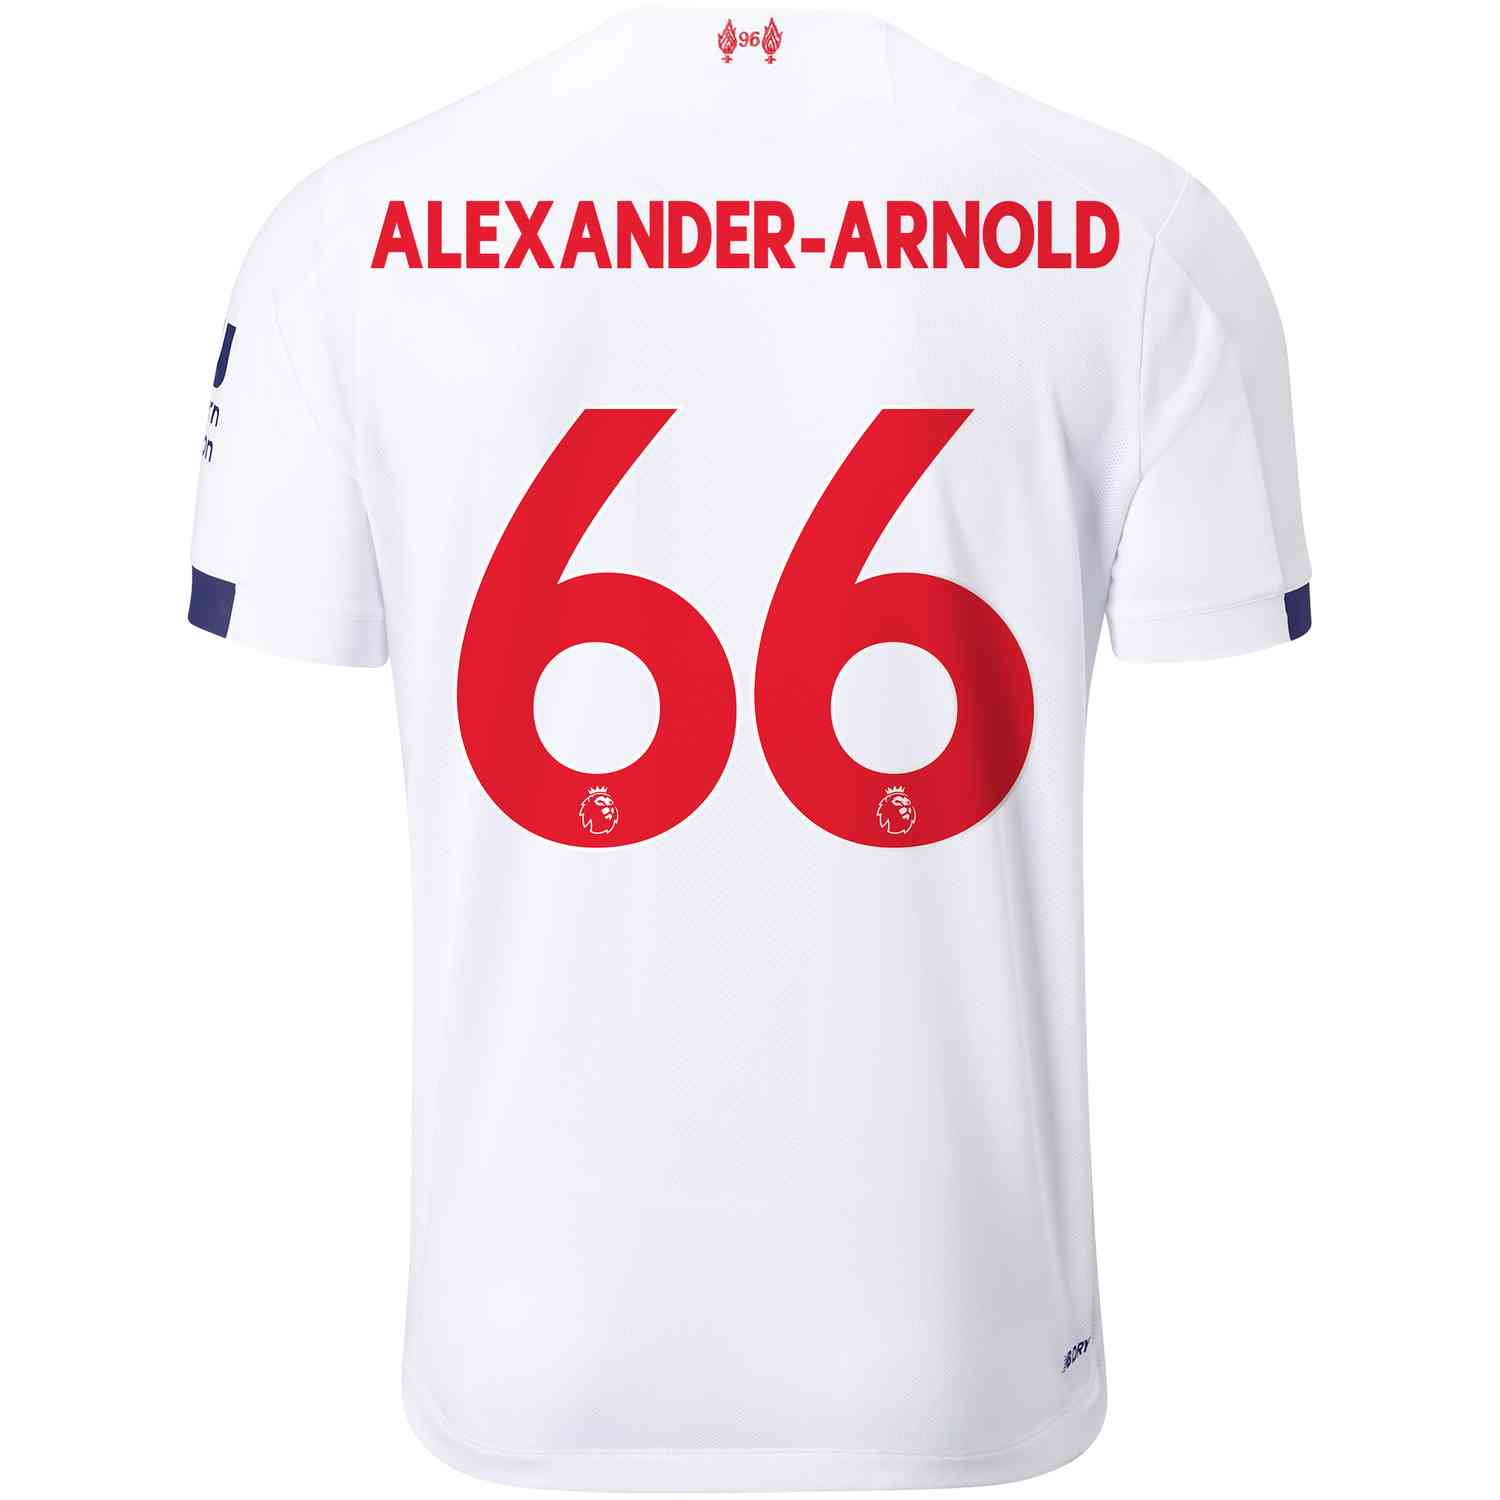 liverpool alexander arnold jersey